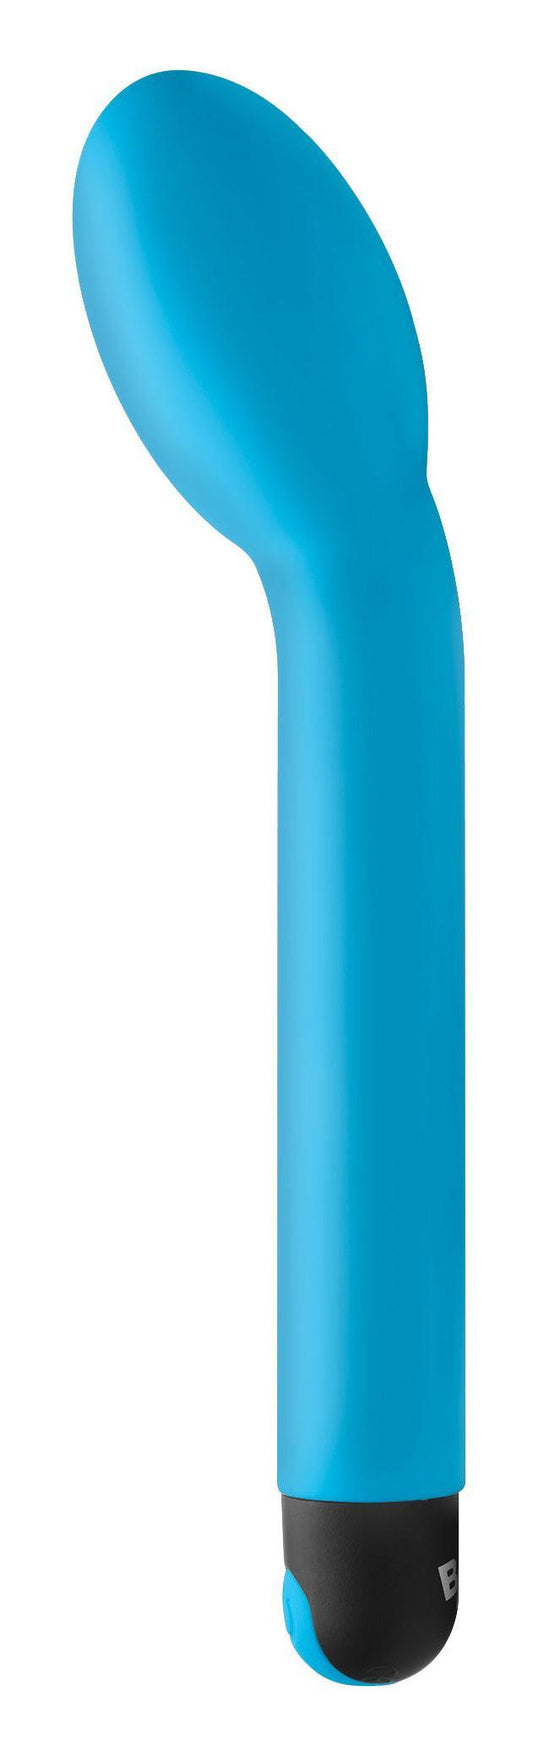 10x G-Spot Vibrator - Blue - My Sex Toy Hub